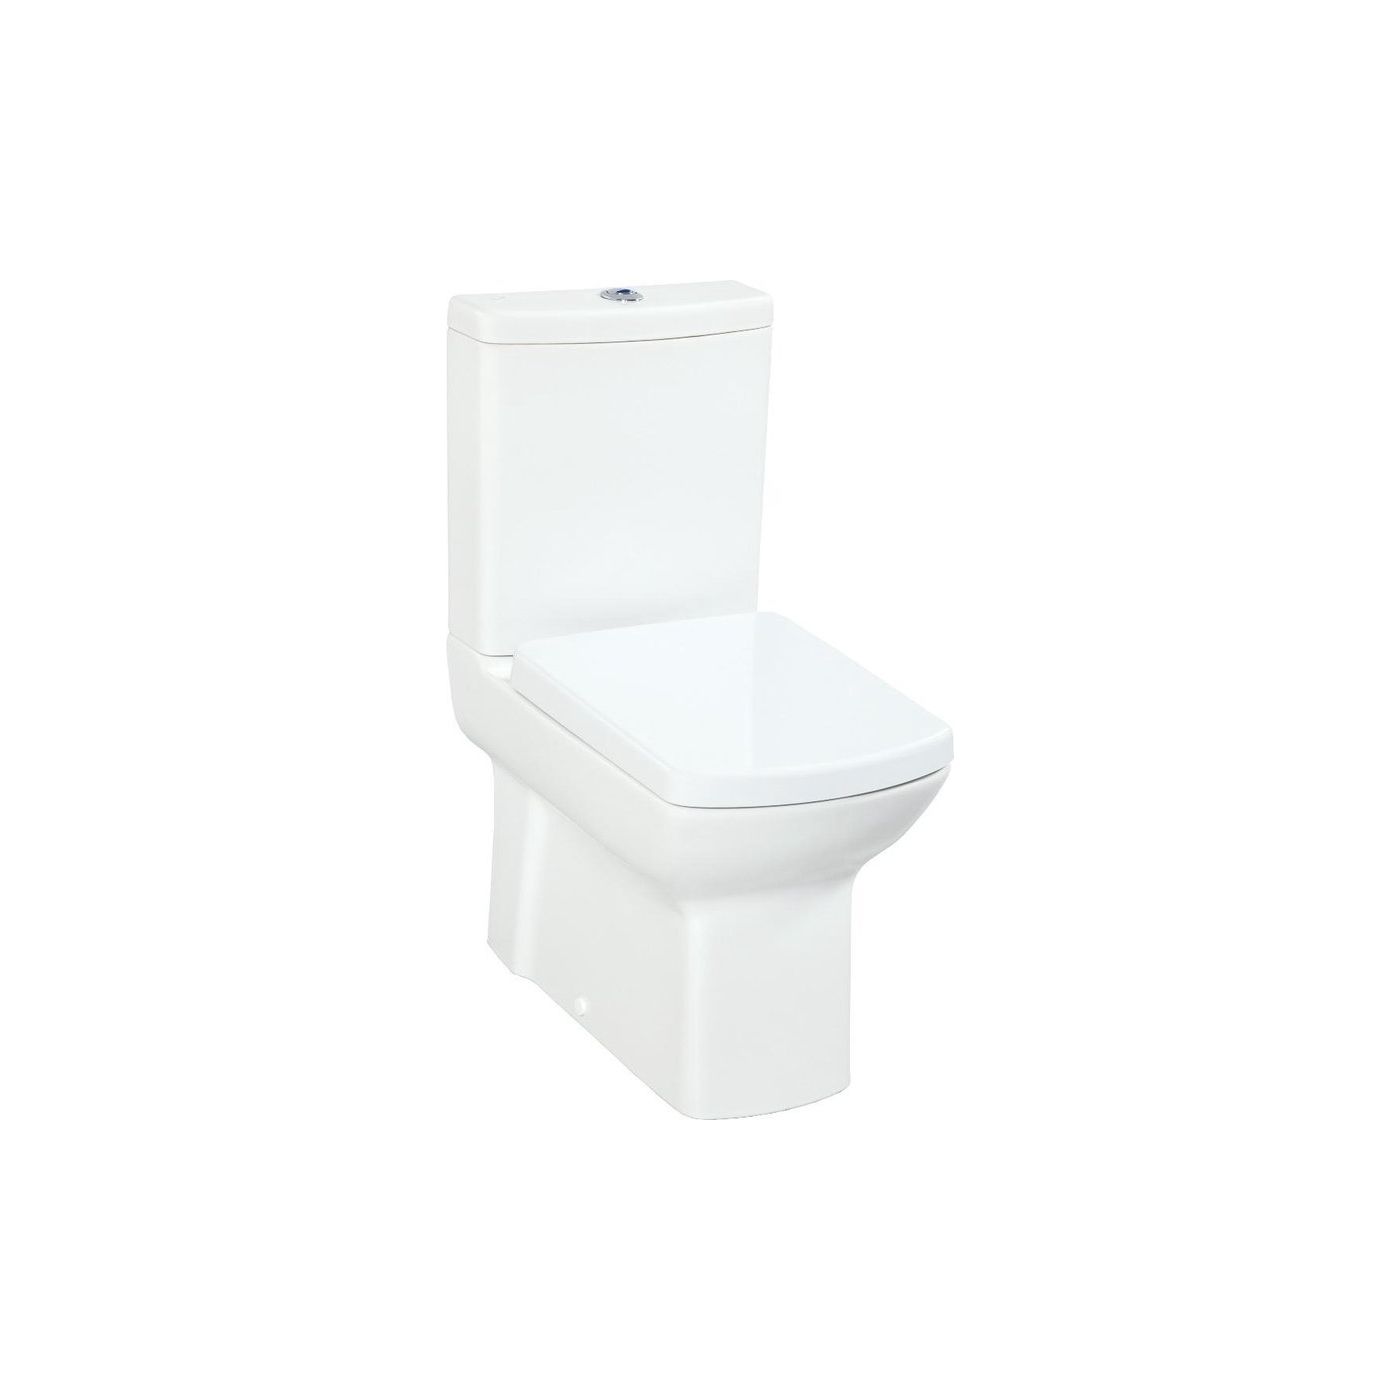 Creavit Lara staande toilet zonder bidet wit